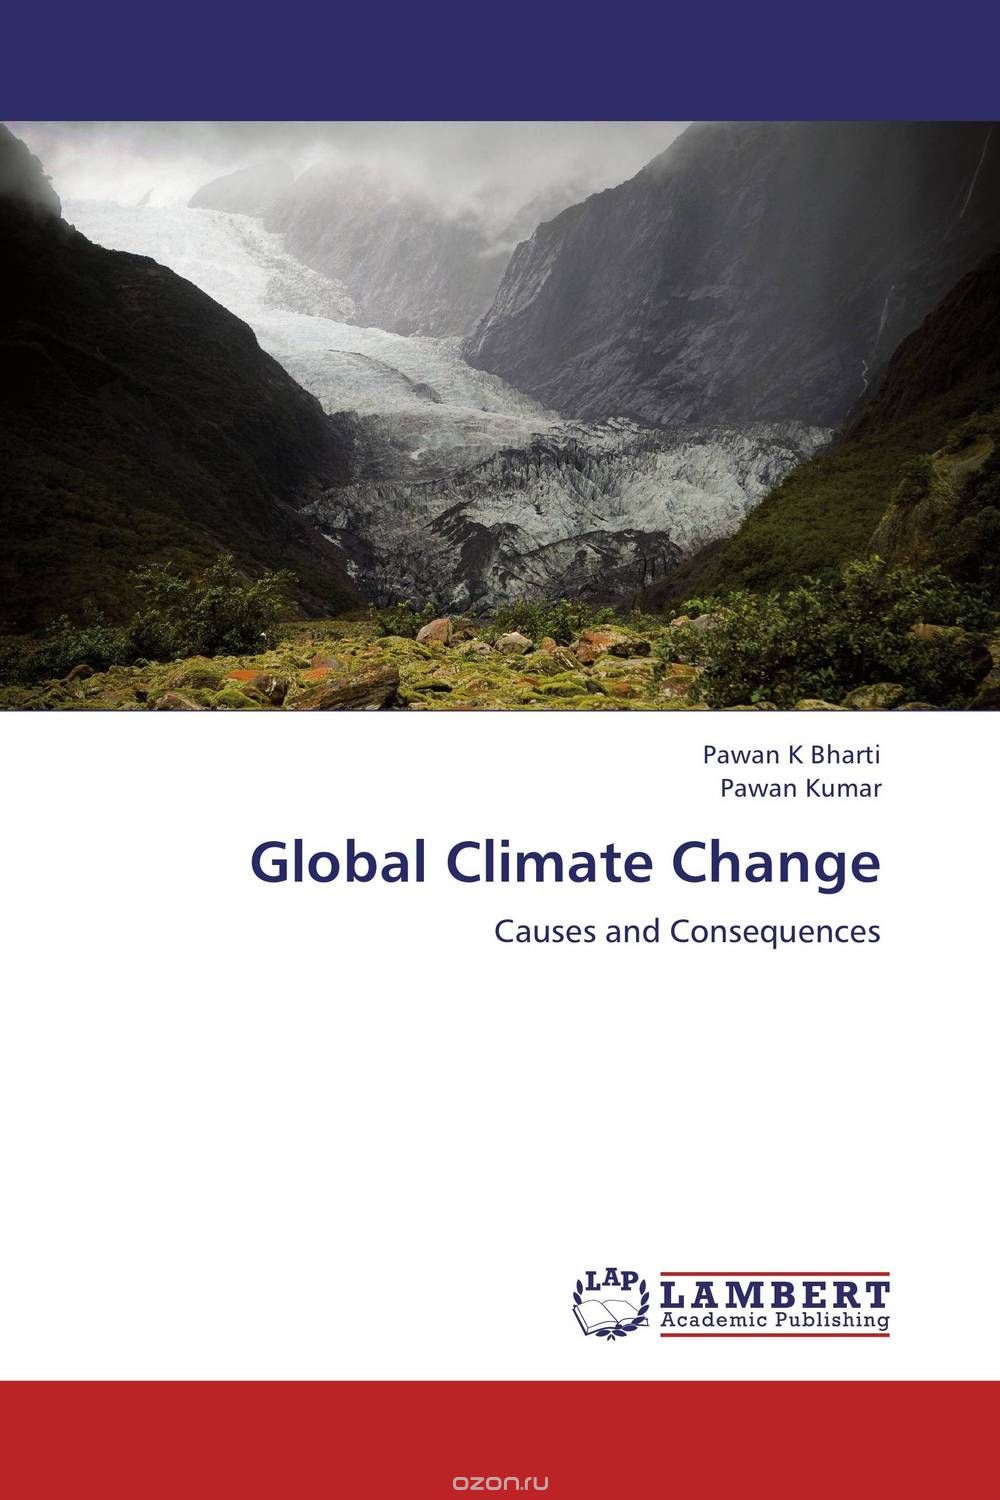 Скачать книгу "Global Climate Change"